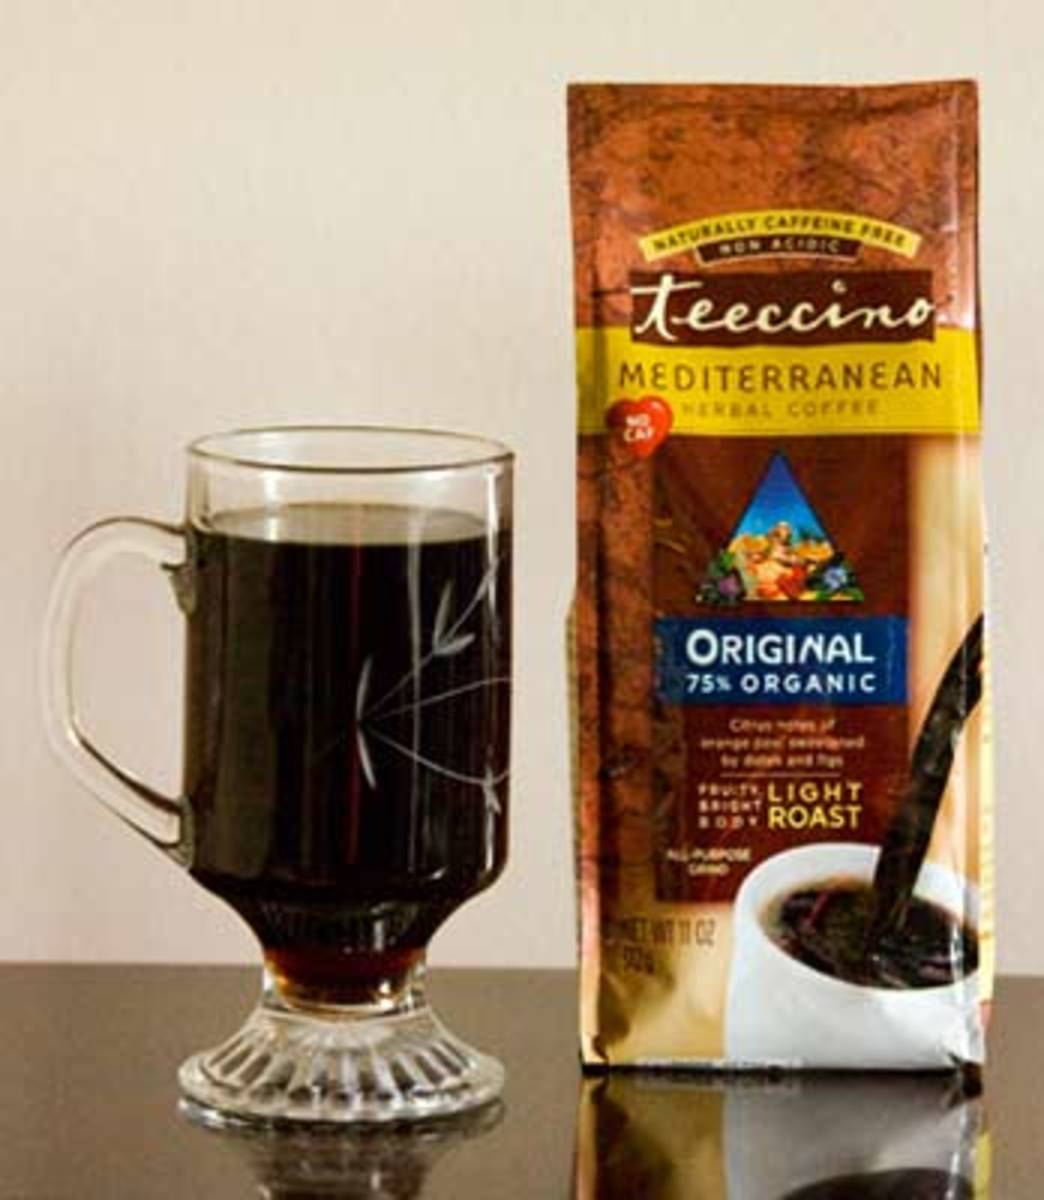 Review of Teeccino Mediterranean Herbal Coffee Light Roast: A Healthier Coffee Alternative